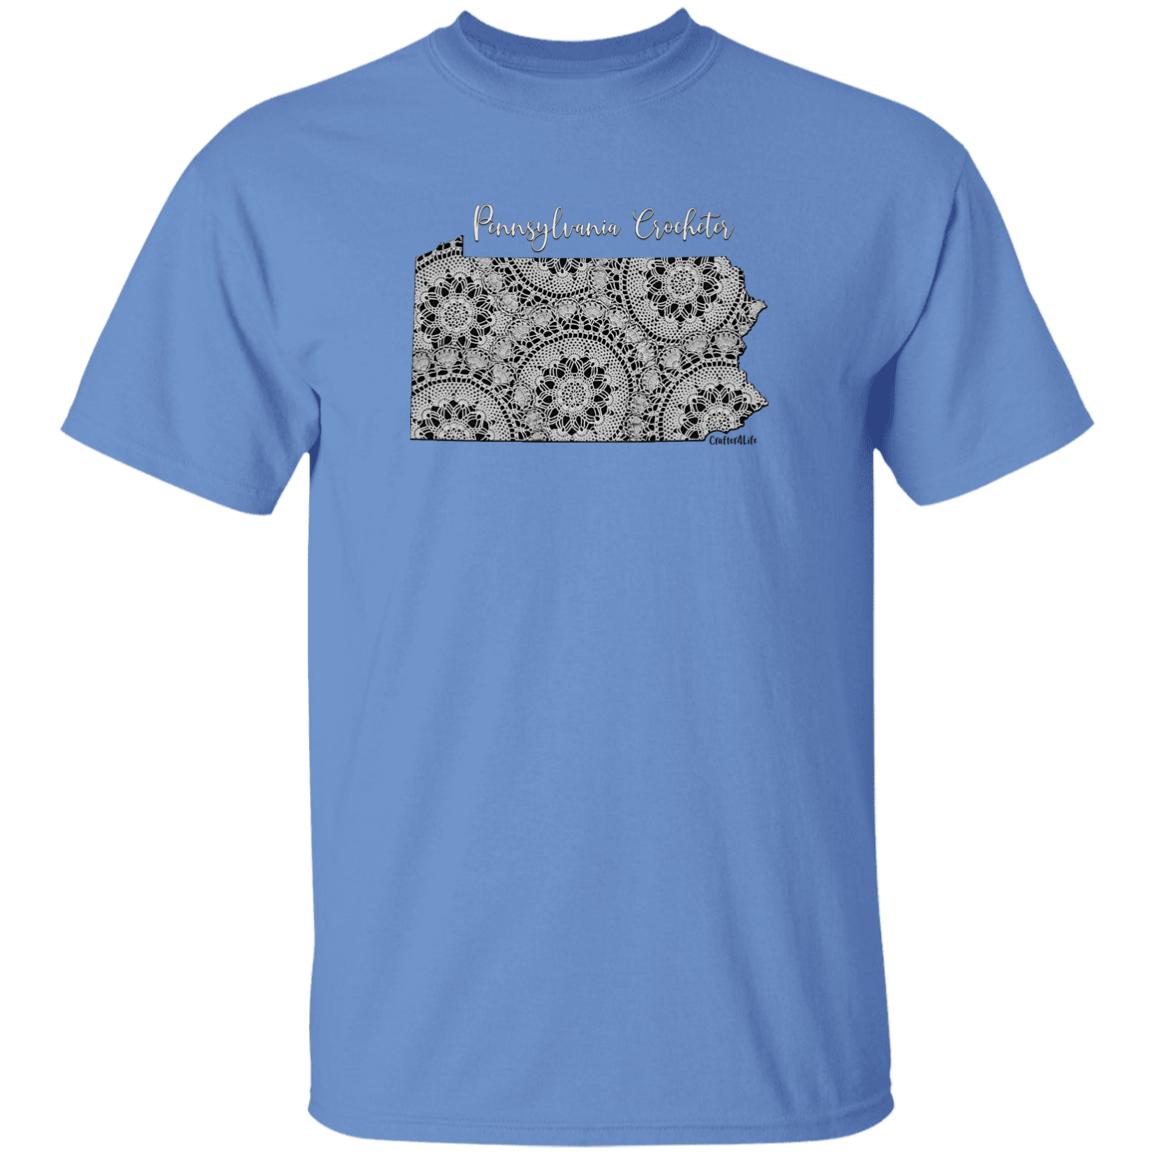 Pennsylvania Crocheter Cotton T-Shirt